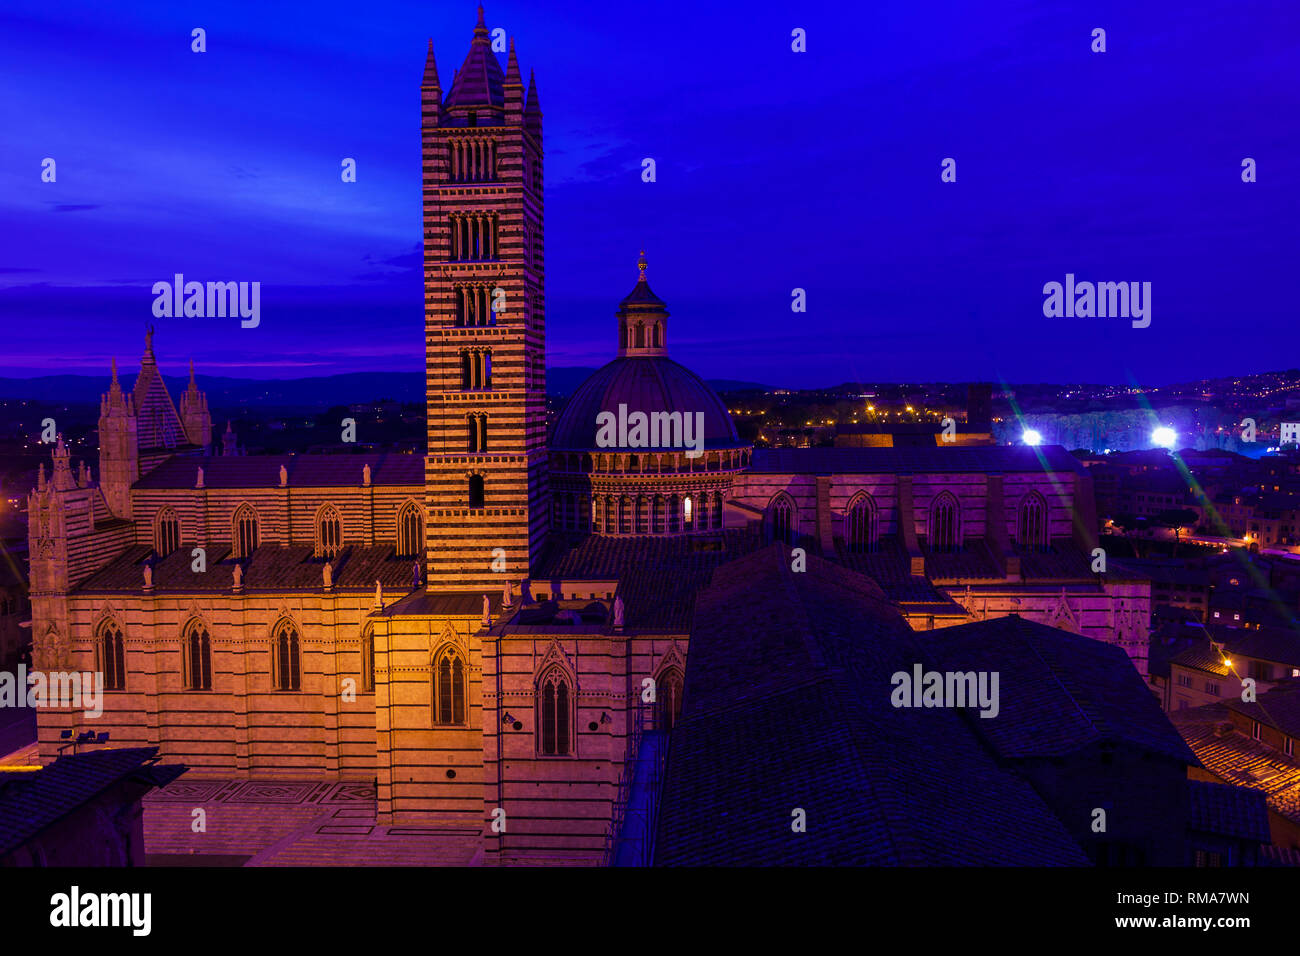 Vista di Siena. Toscana, Italia. Foto Stock